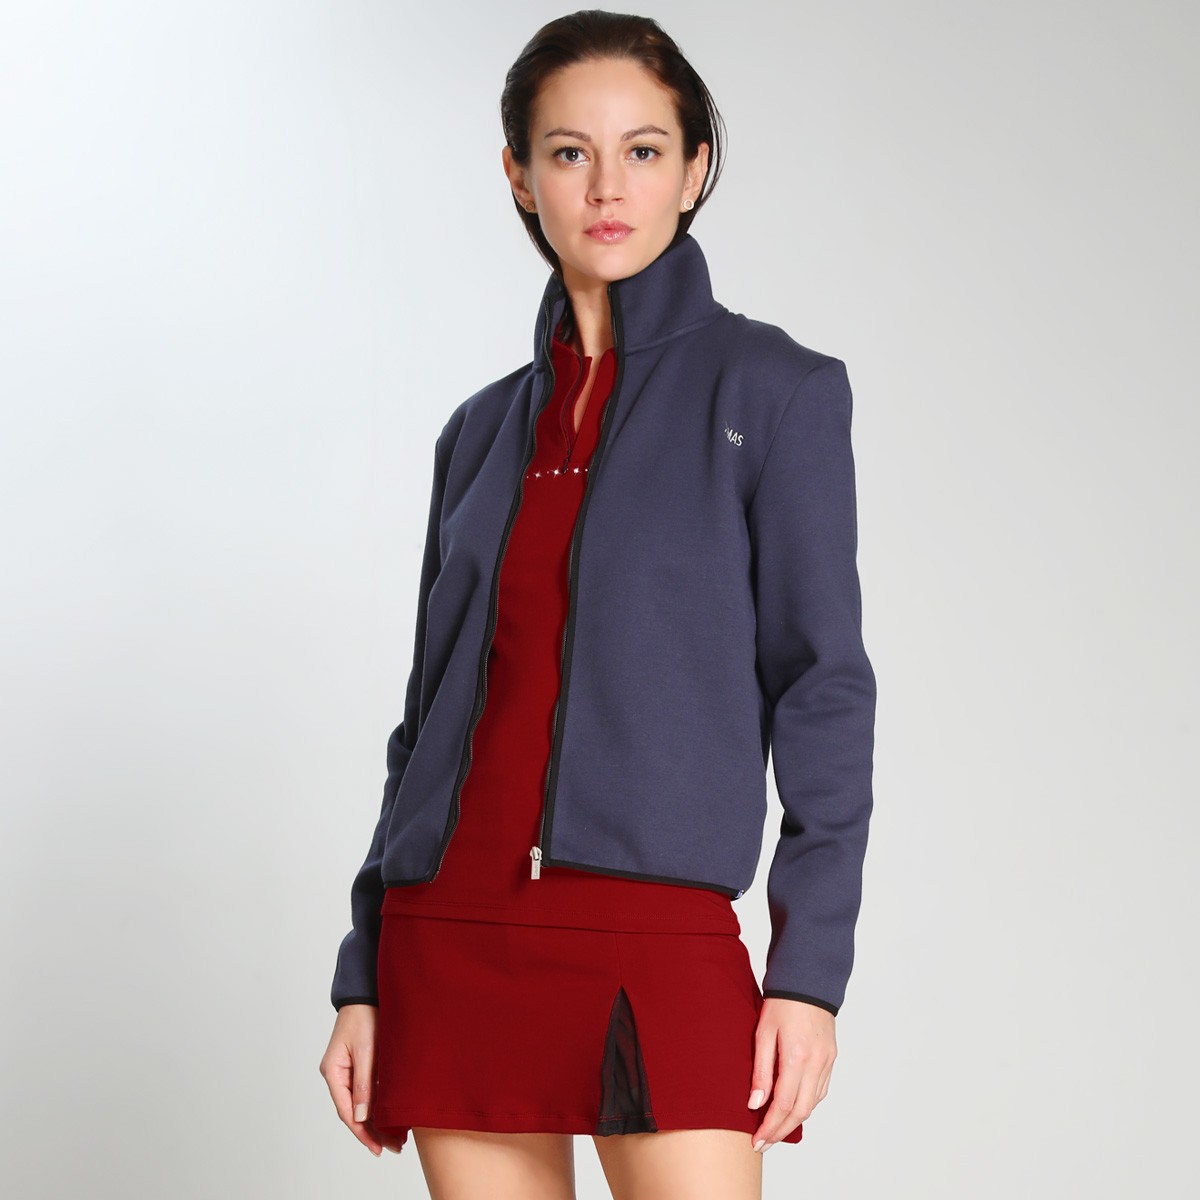 Women's sports jacket with zipper in black-hangkhonggiare.com.vn